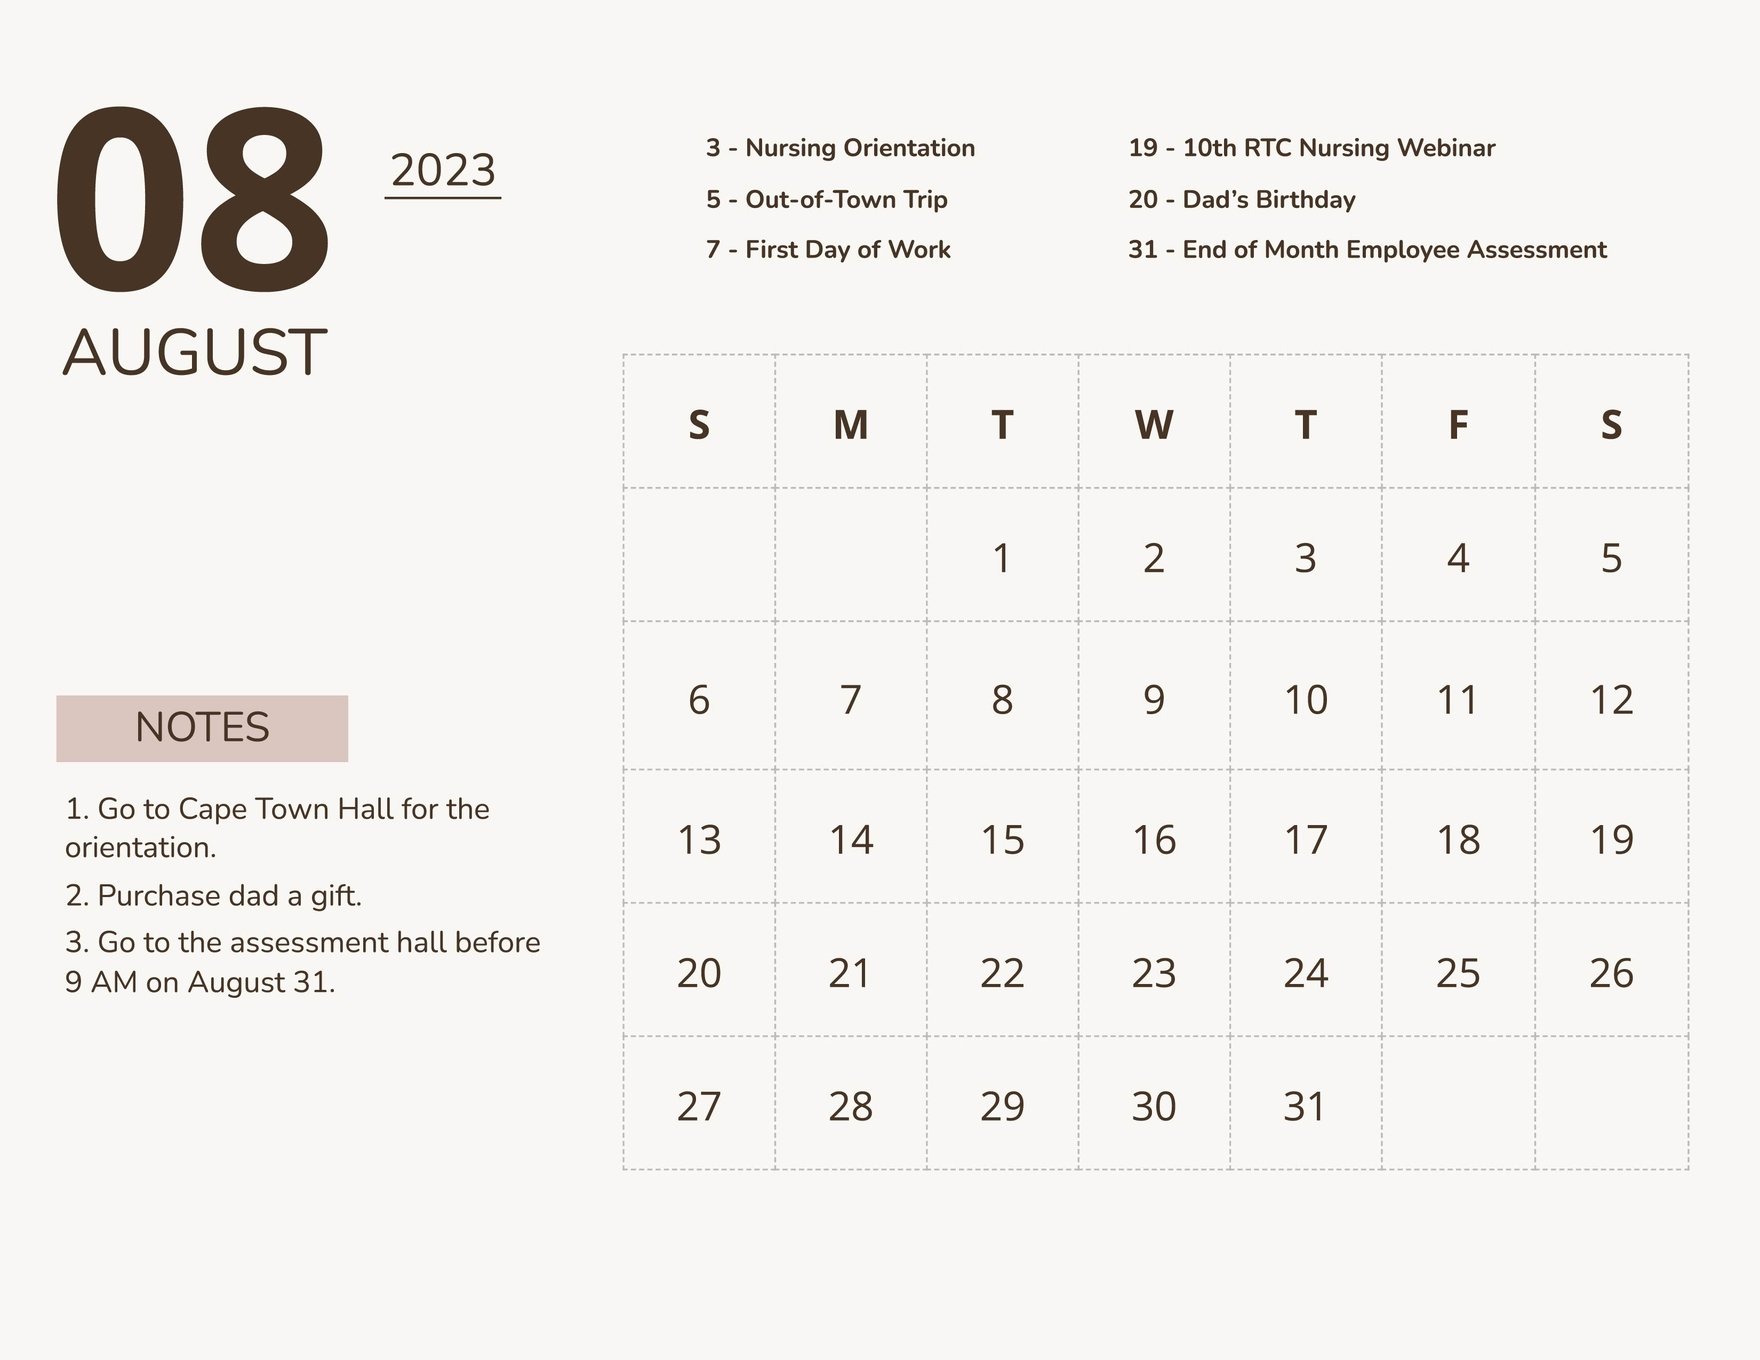 Free Printable August 2023 Monthly Calendar Template in Word, Google Docs, Excel, Google Sheets, Illustrator, EPS, SVG, JPG